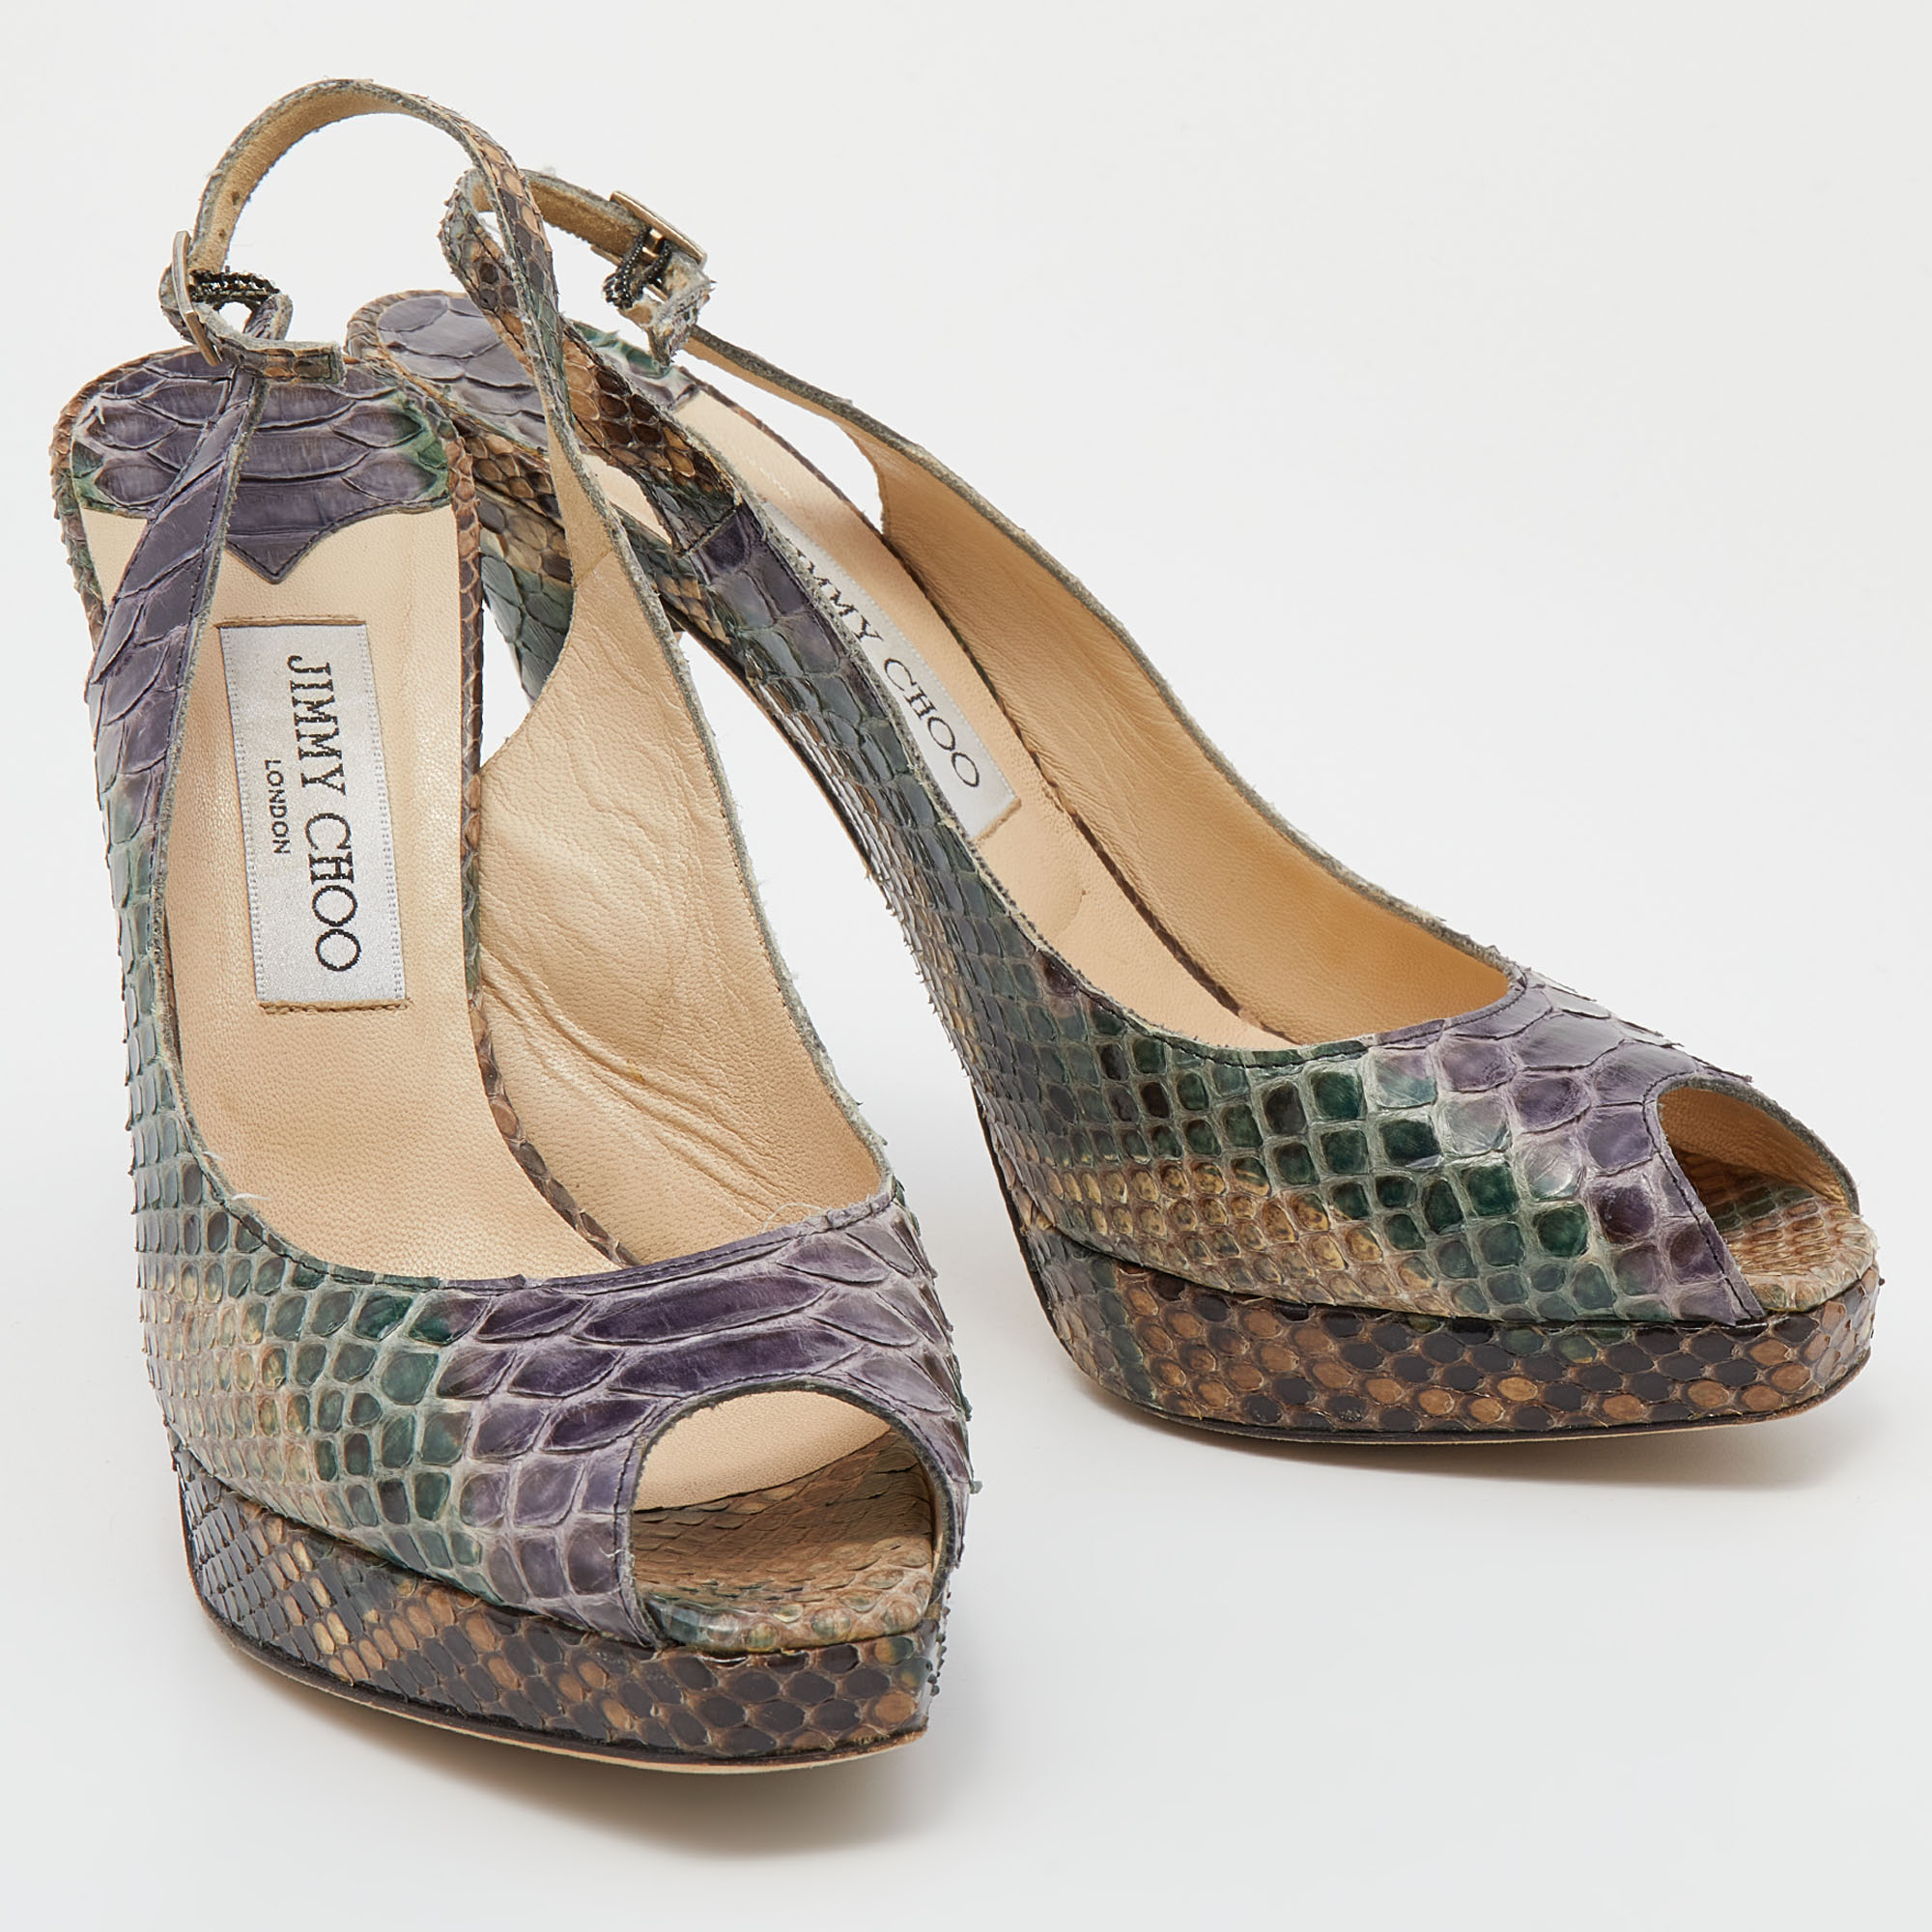 Jimmy Choo Multicolor Python Leather Peep Toe Platform Nova Slingback Sandals Size 39.5